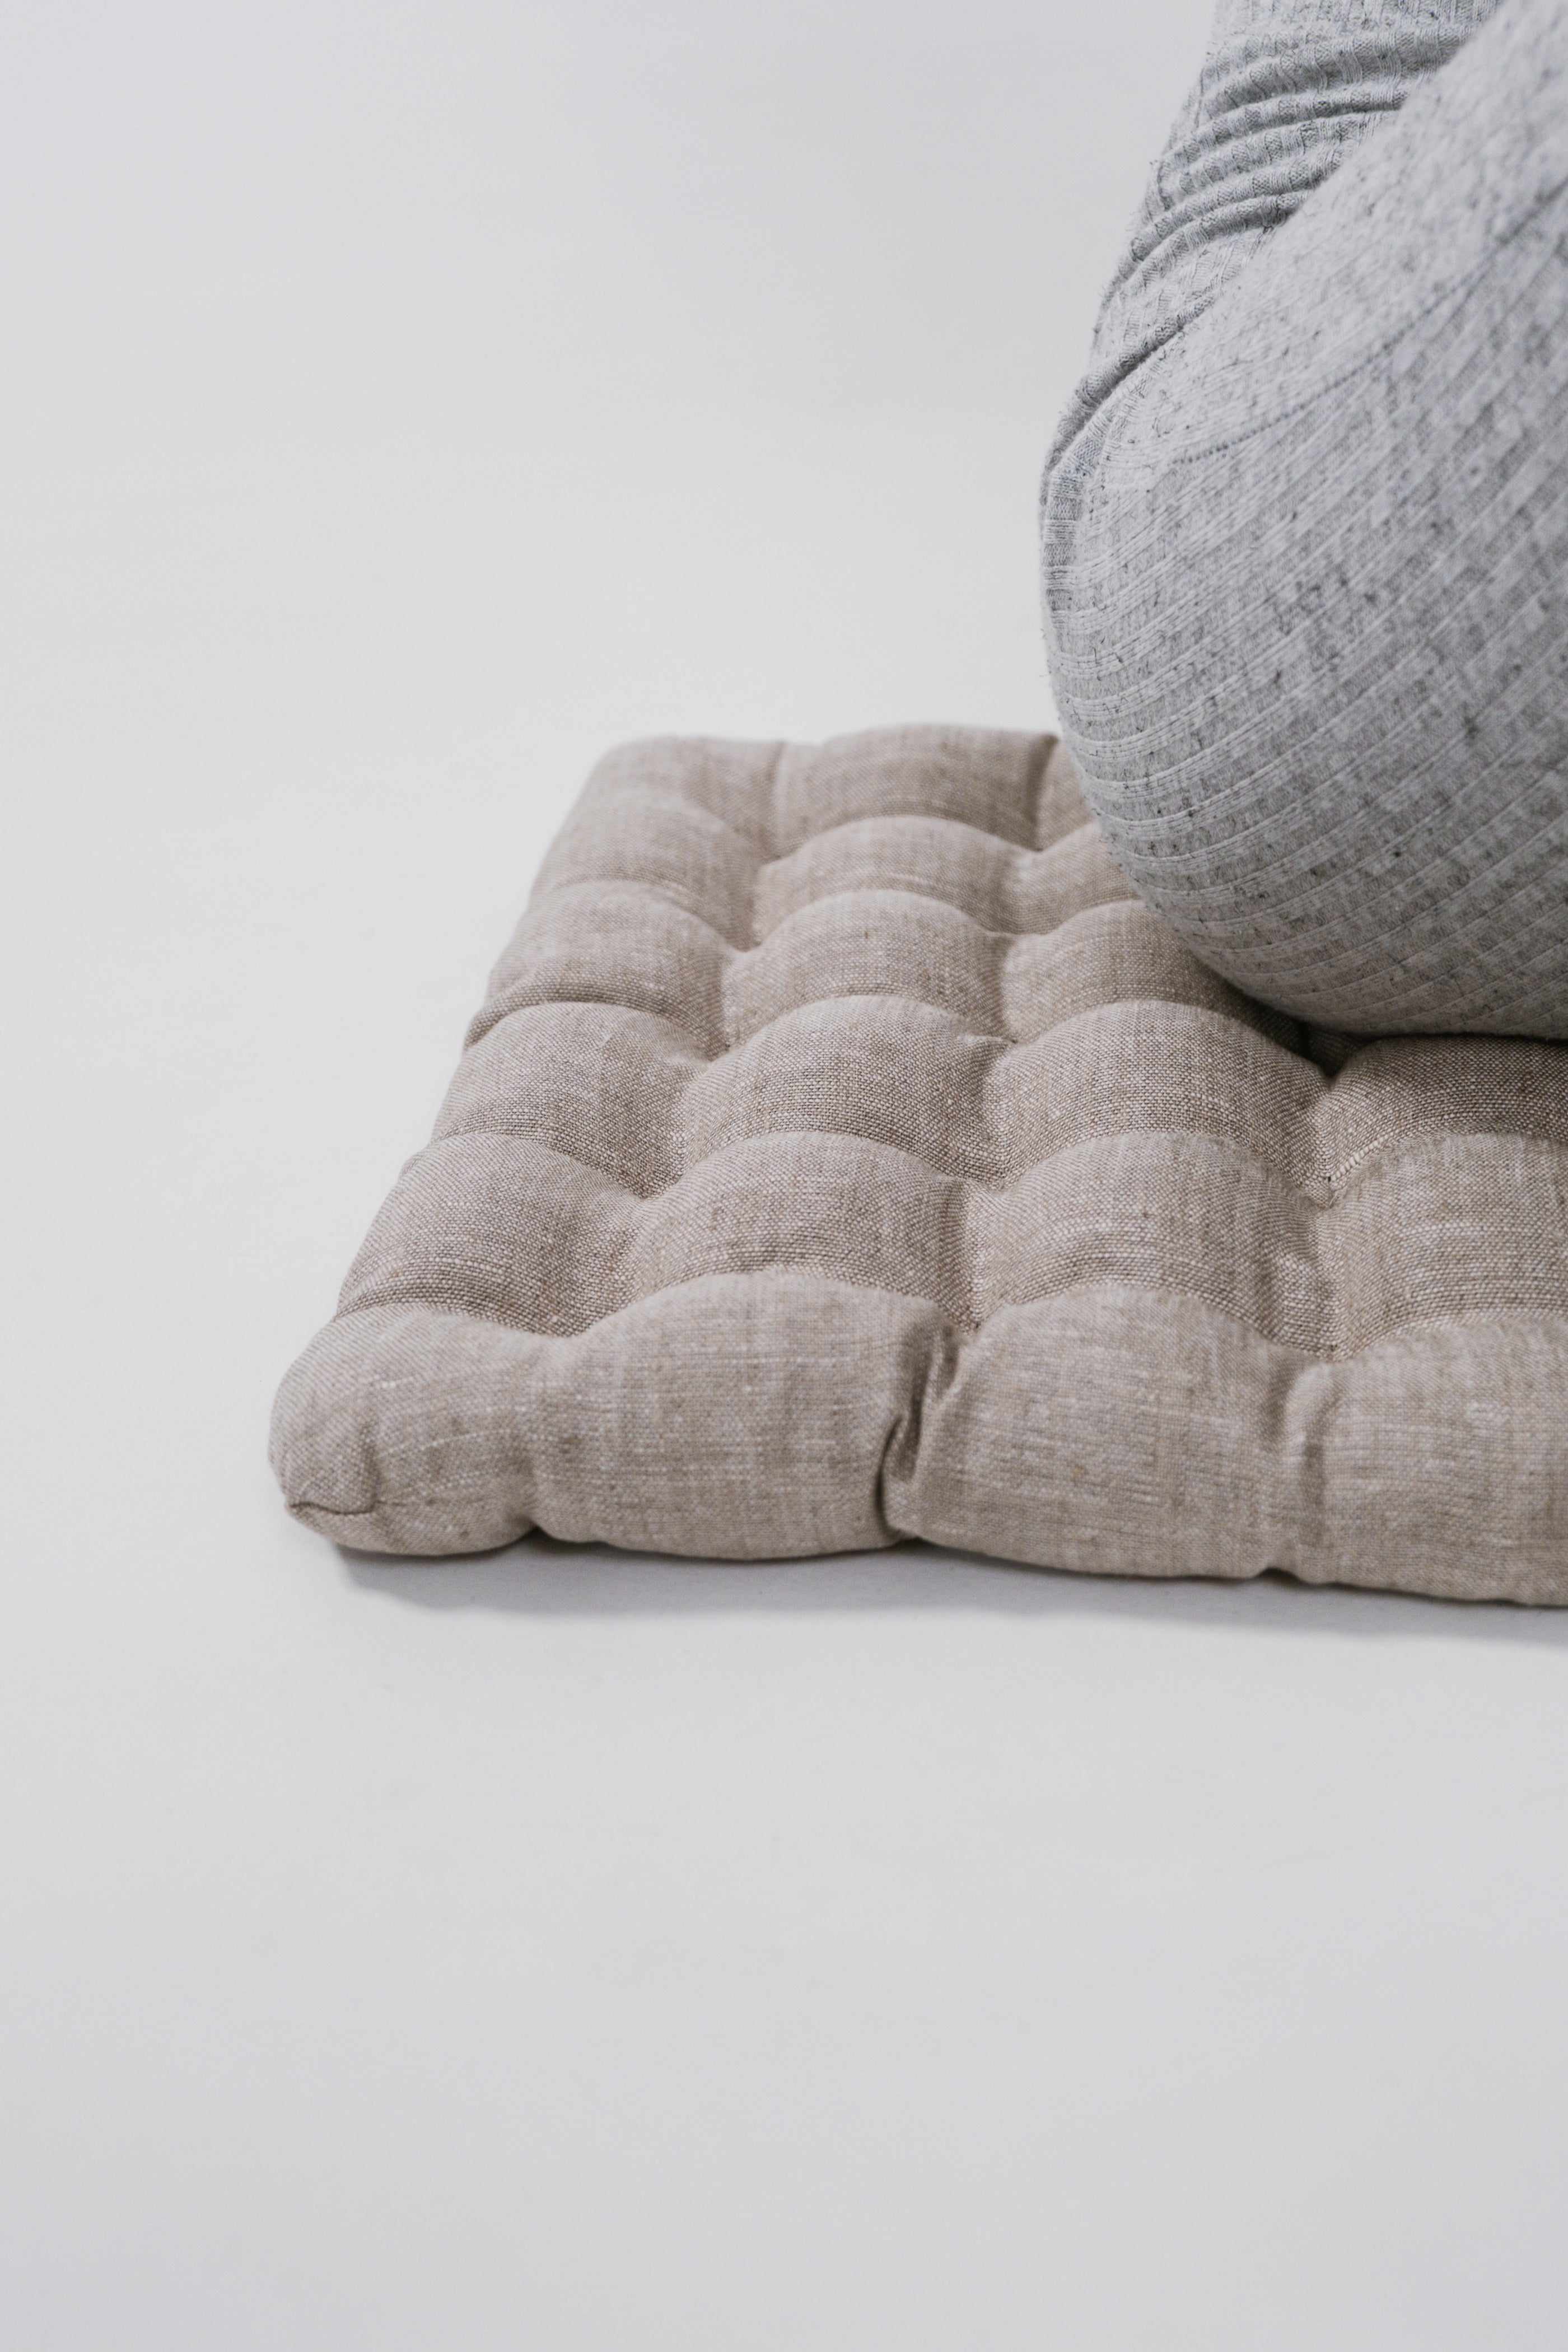 Kids Zabuton Mat Linen Floor Cushion with Buckwheat hulls 23x35/  Meditation cushion for Yoga studio/ Massage Natural Pillow seat